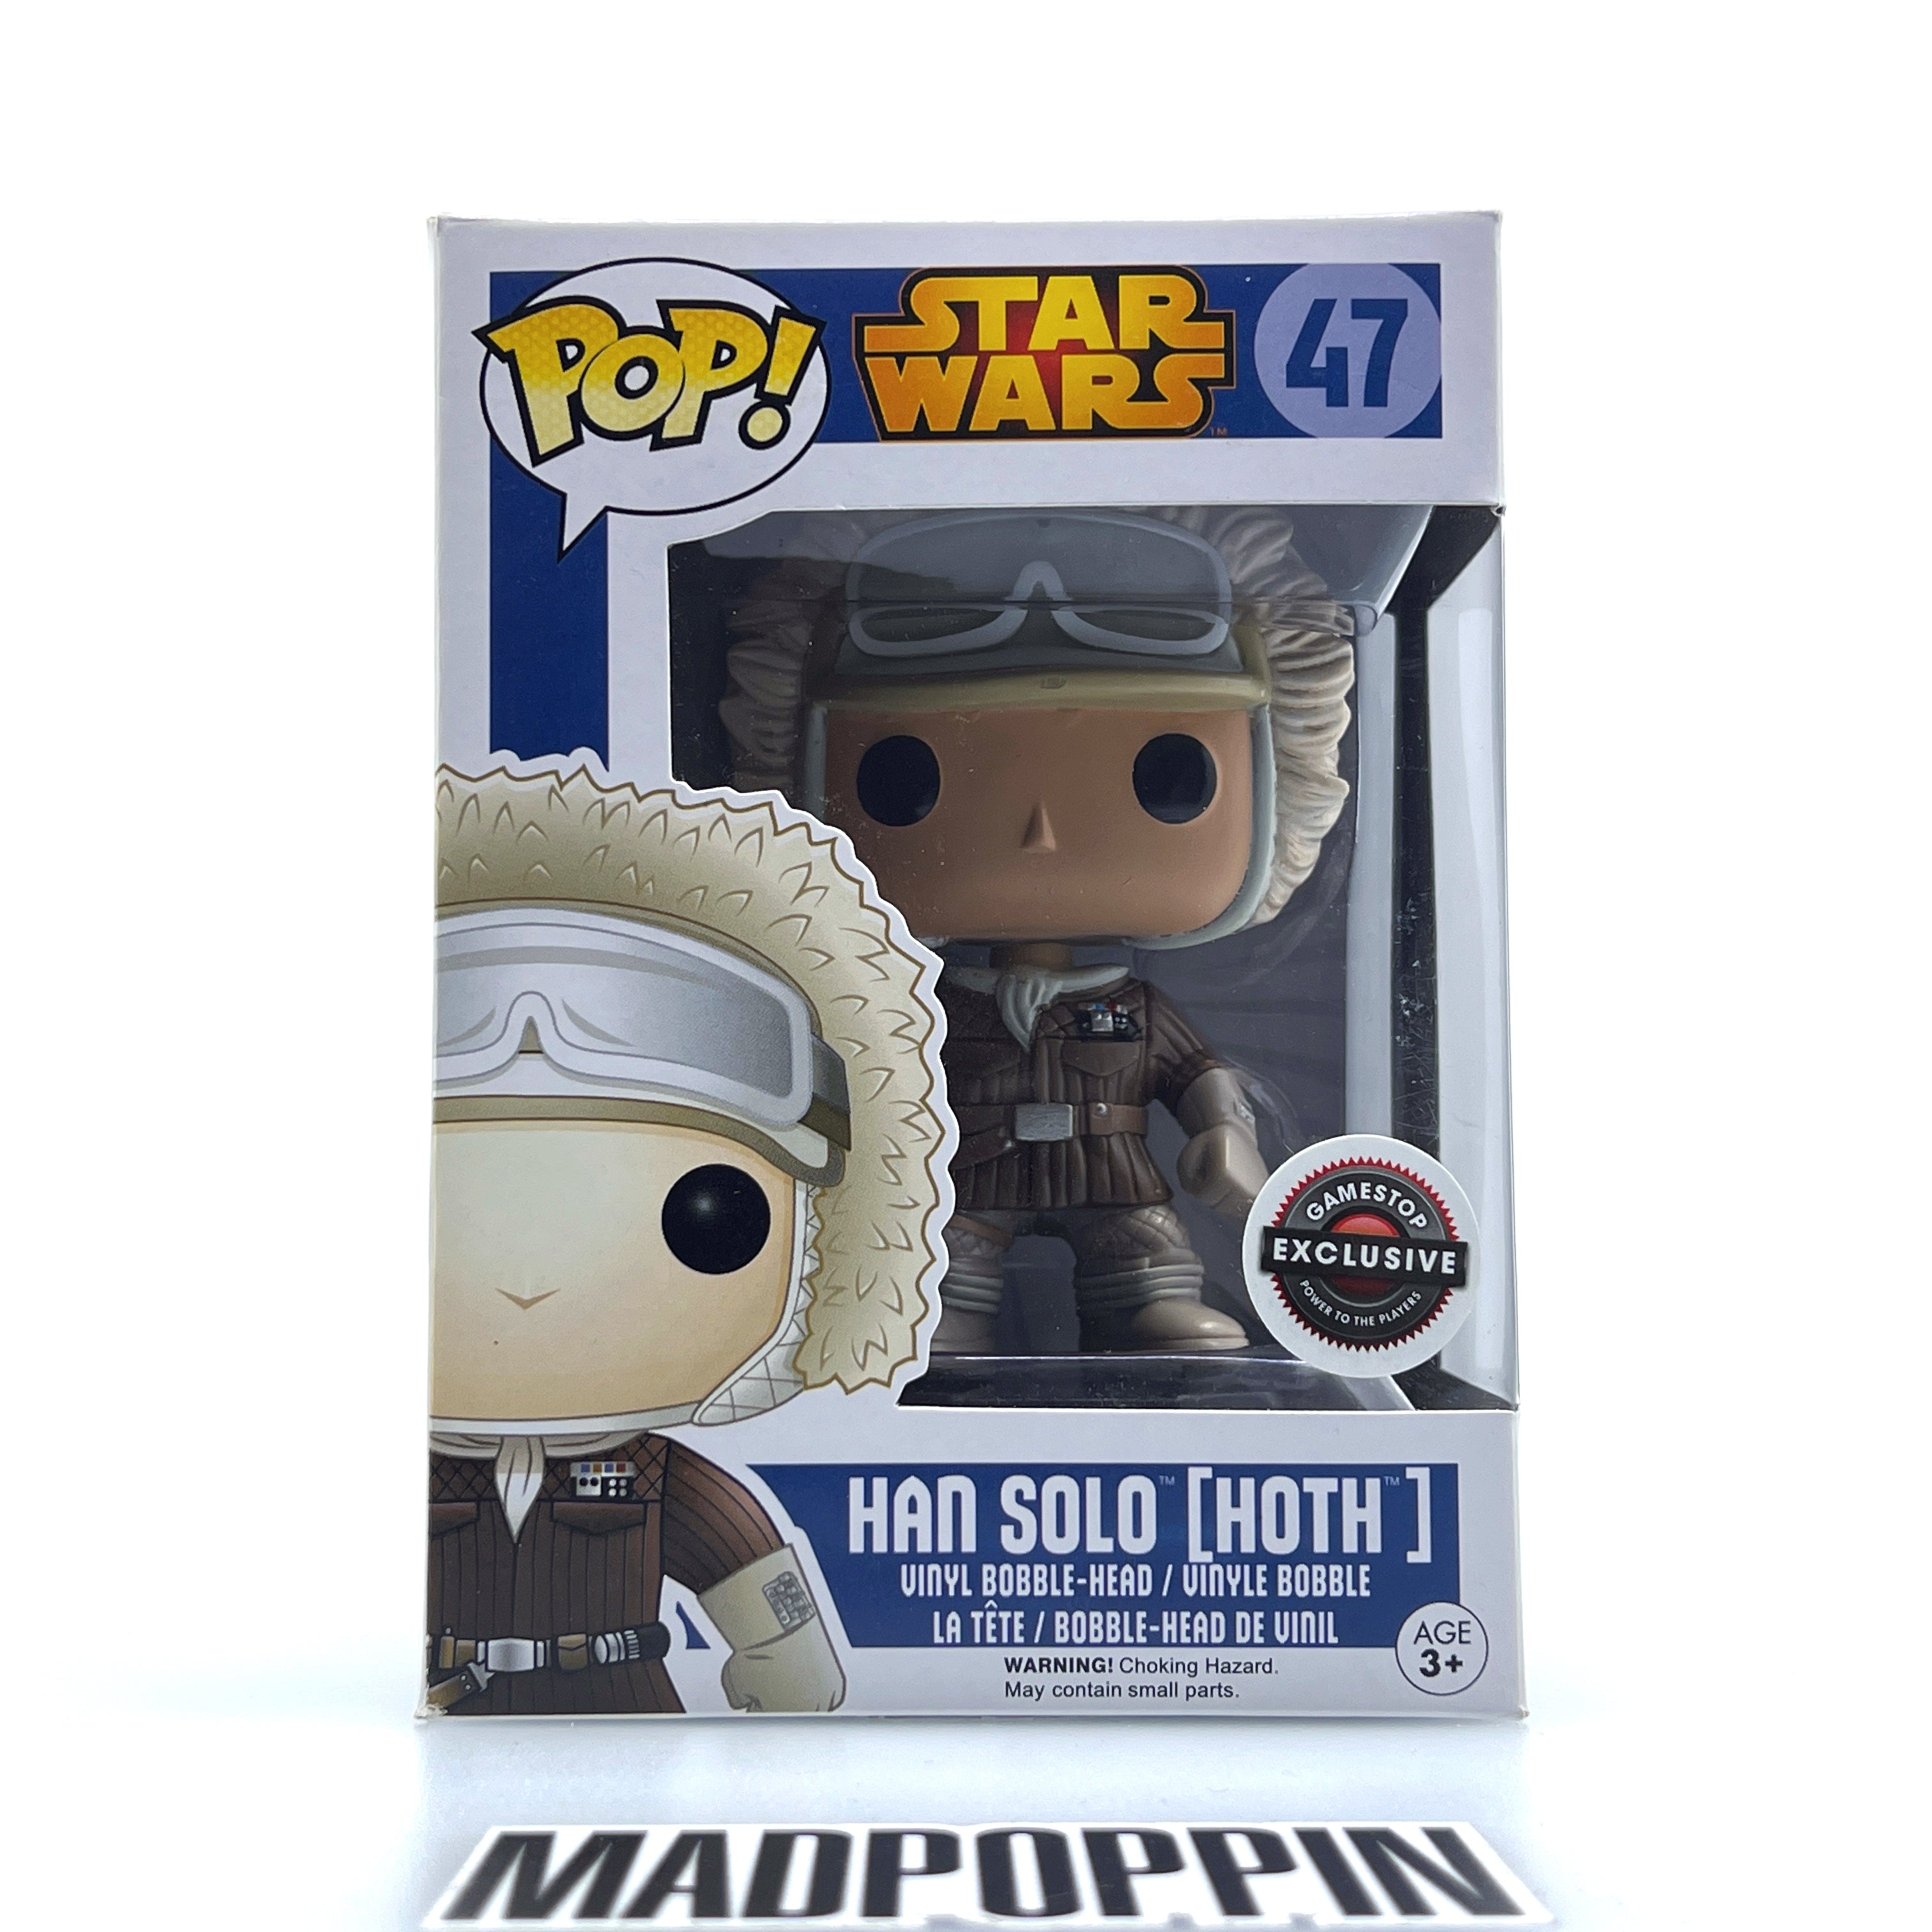 Funko Pop Star Wars Han Solo Hoth Blue Box GameStop 47